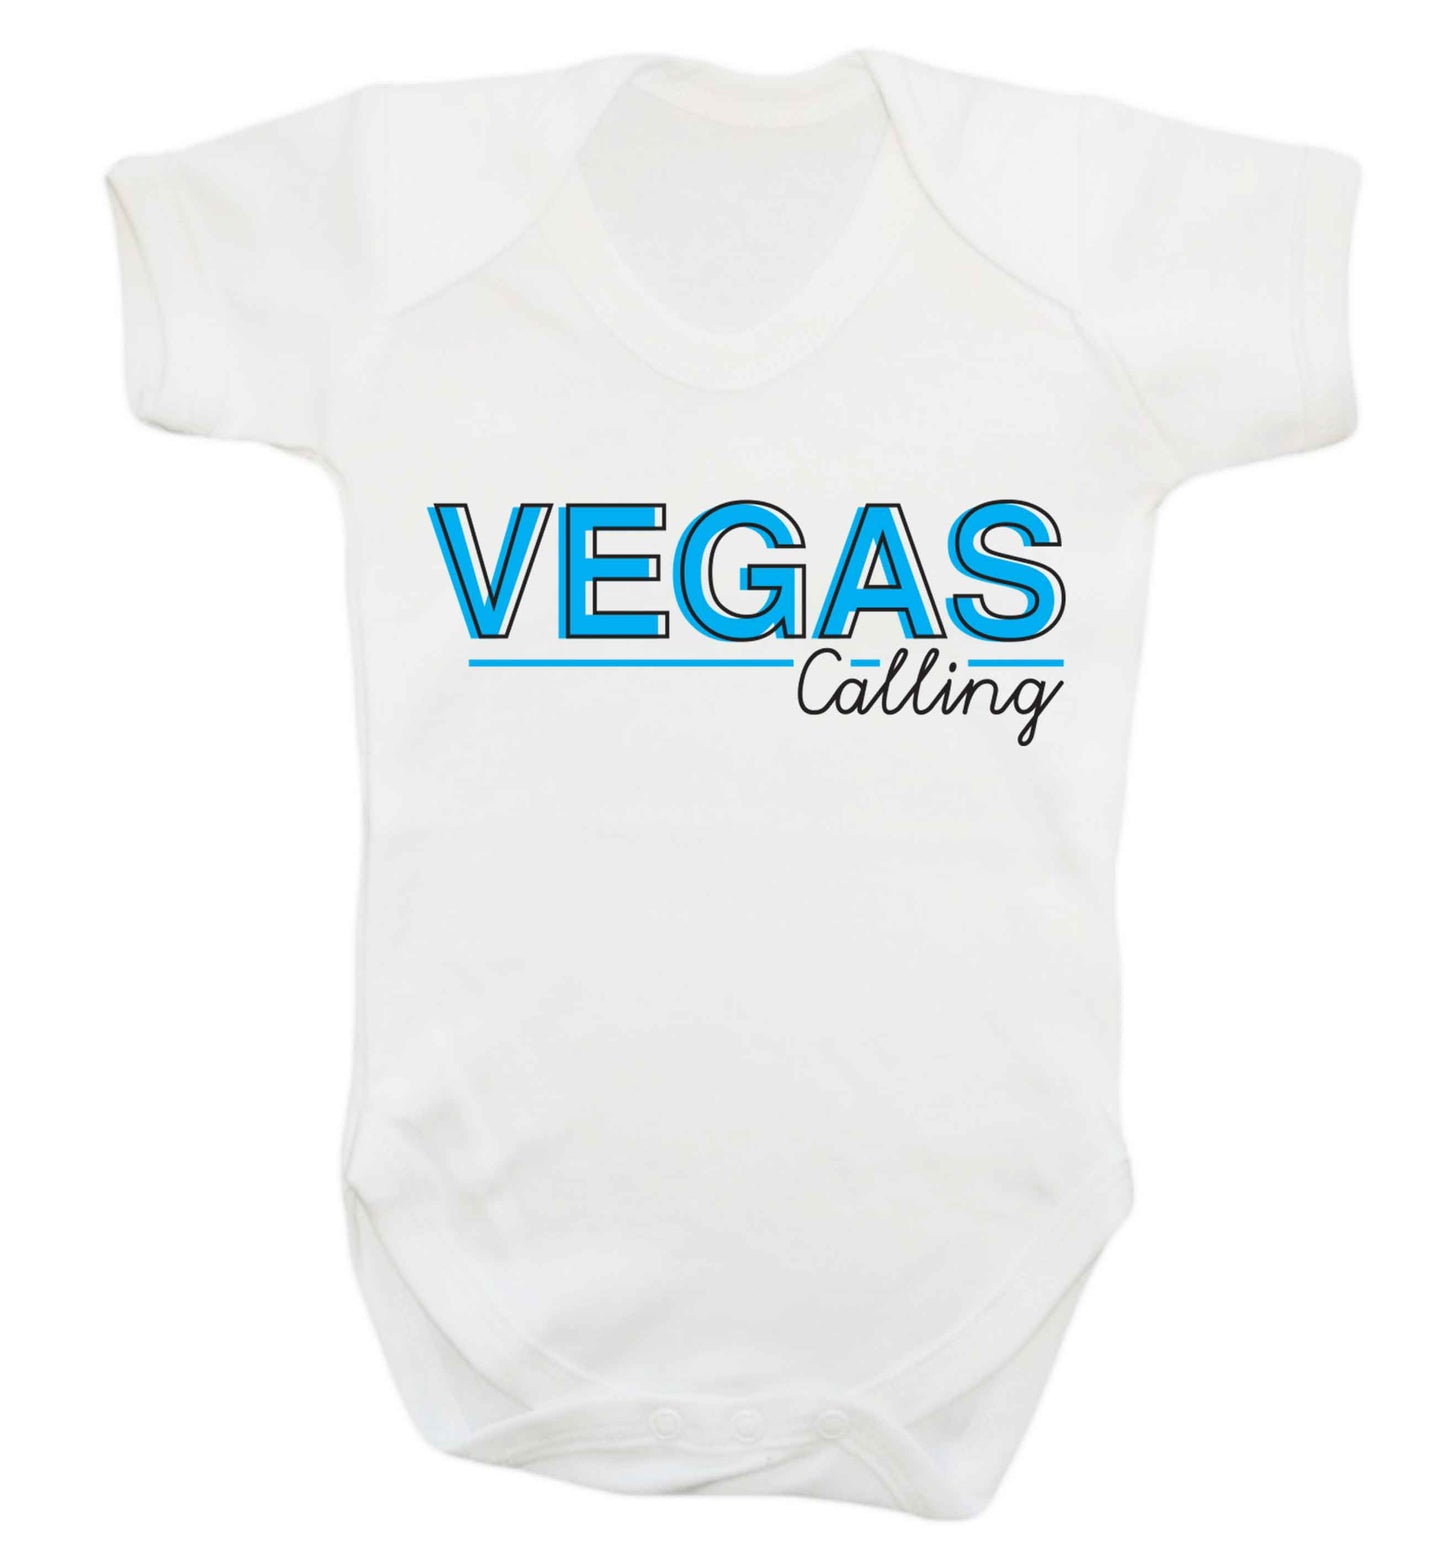 Vegas calling Baby Vest white 18-24 months